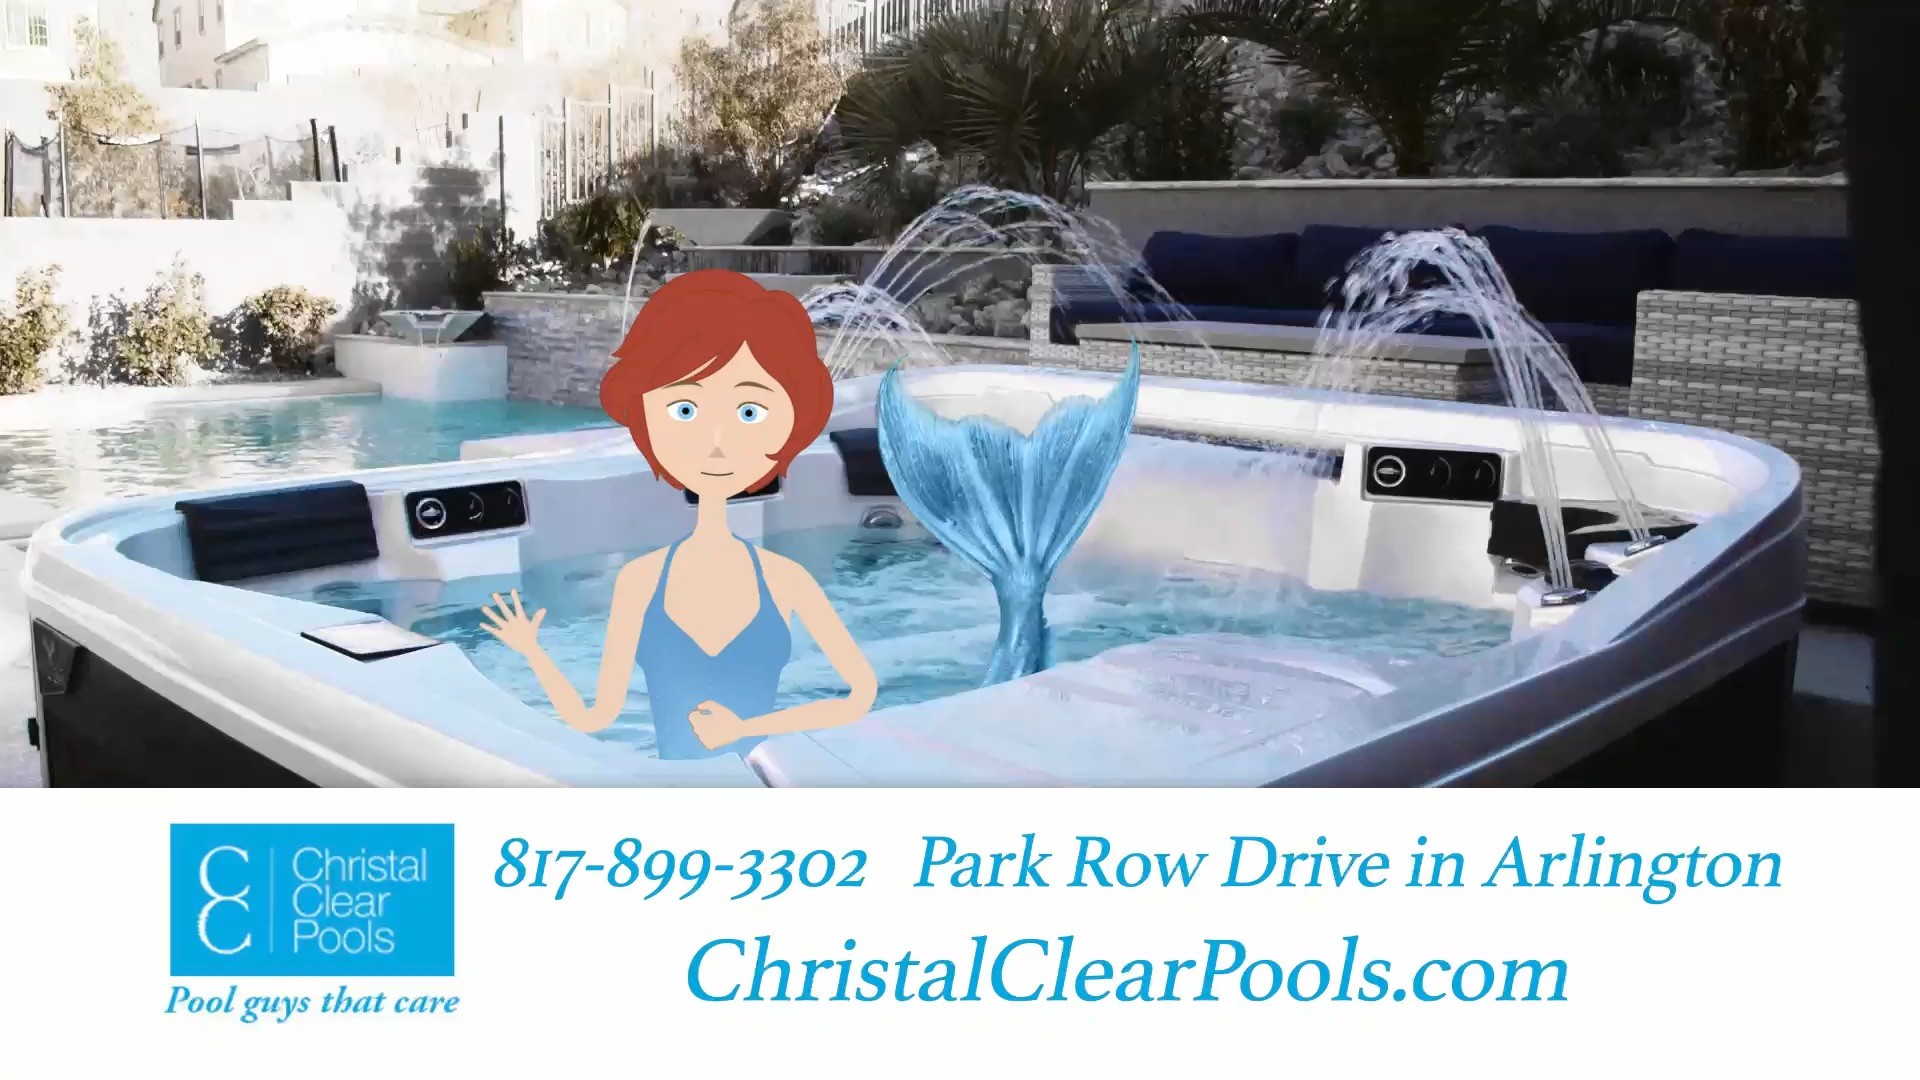 Christal Clear Pools: Tubs & Spas